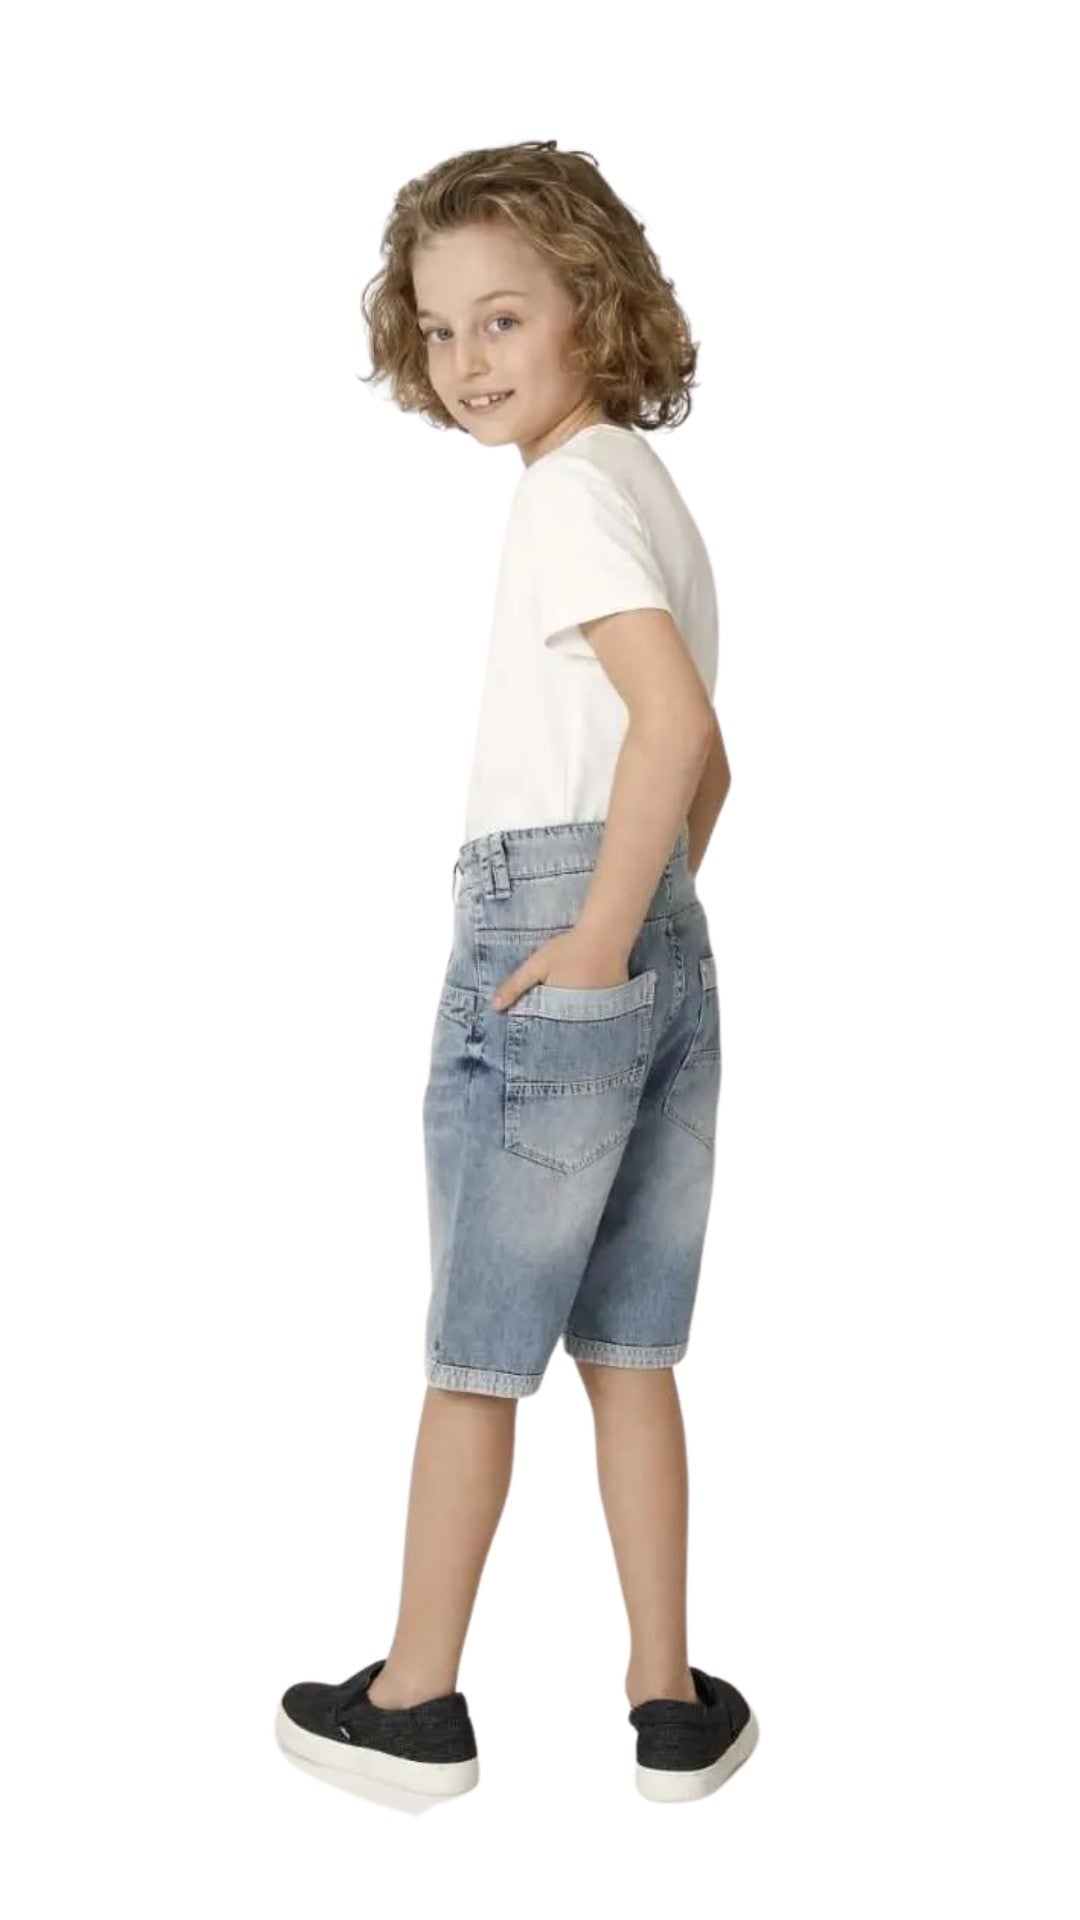 InCity Boys Tween 7-14 Years Regular Fit Casual Cotton Exten Dress Shorts InCity Boys & Girls